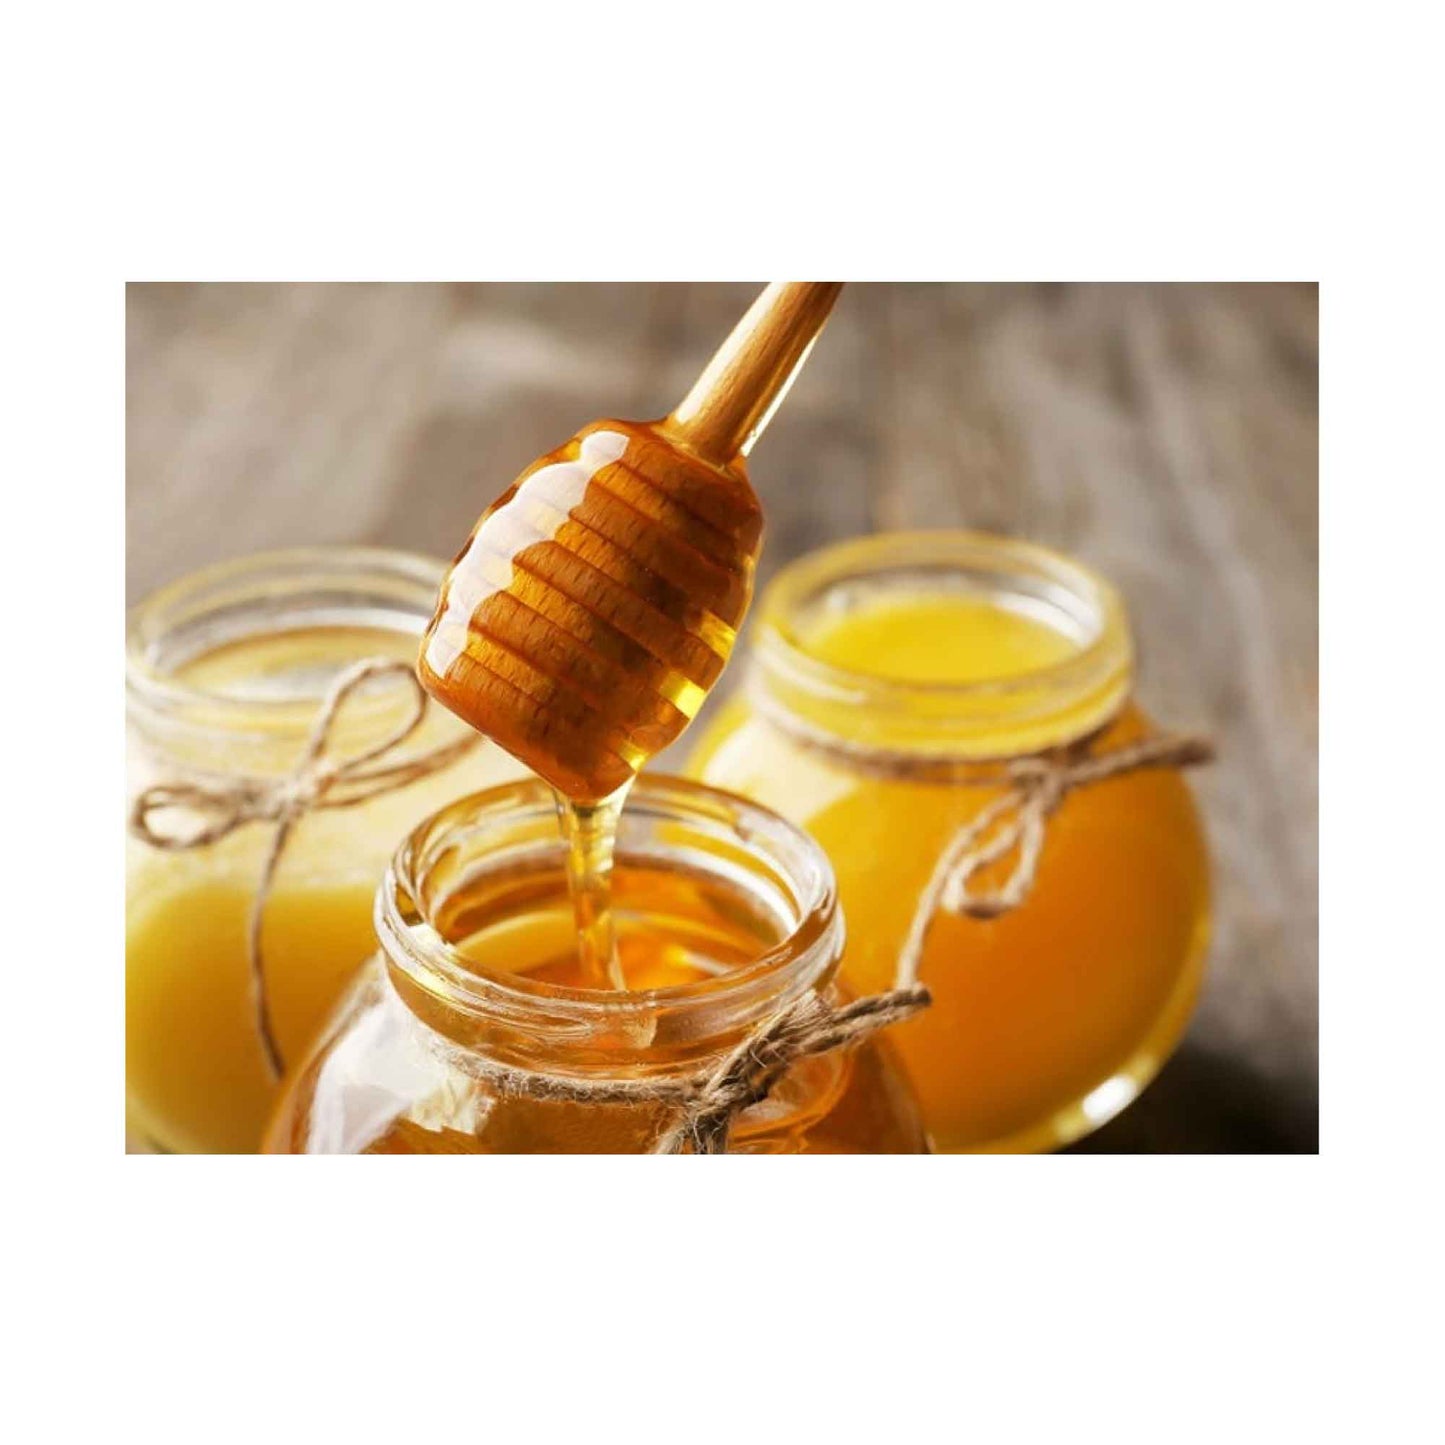 4x 100g Plant Oil Soap Manuka Honey Scent Pure Vegetable Base Bar Australian